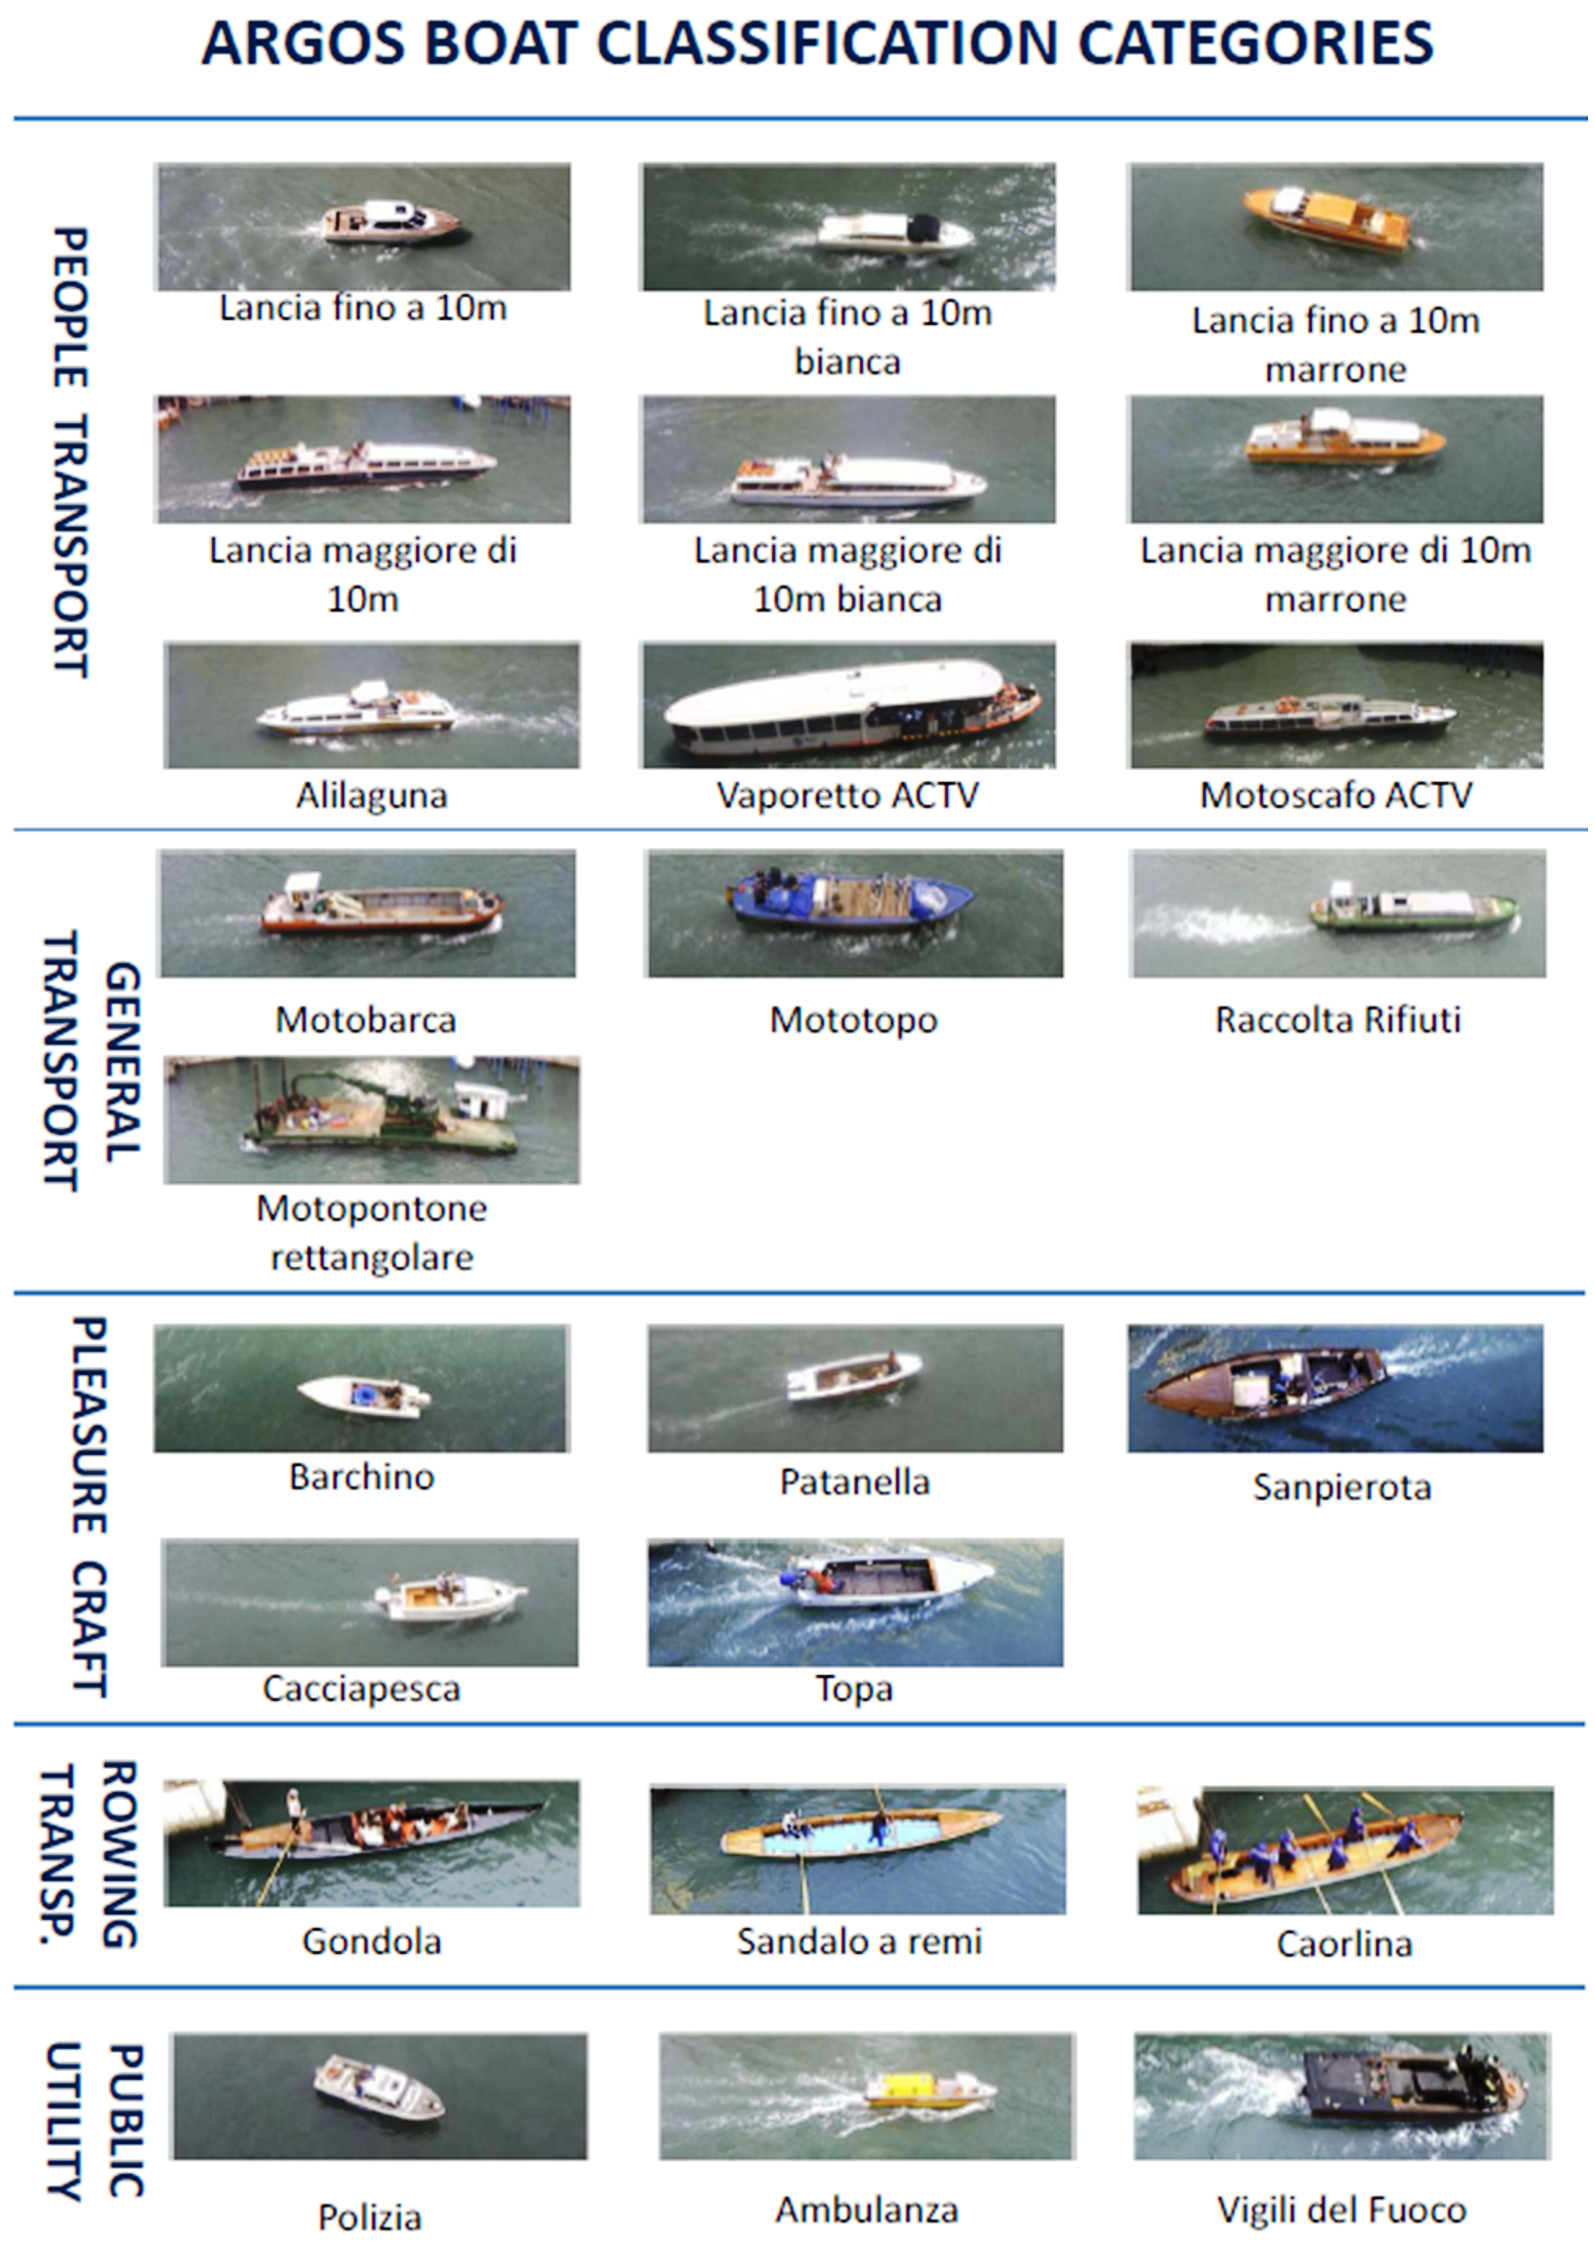 Boat categories